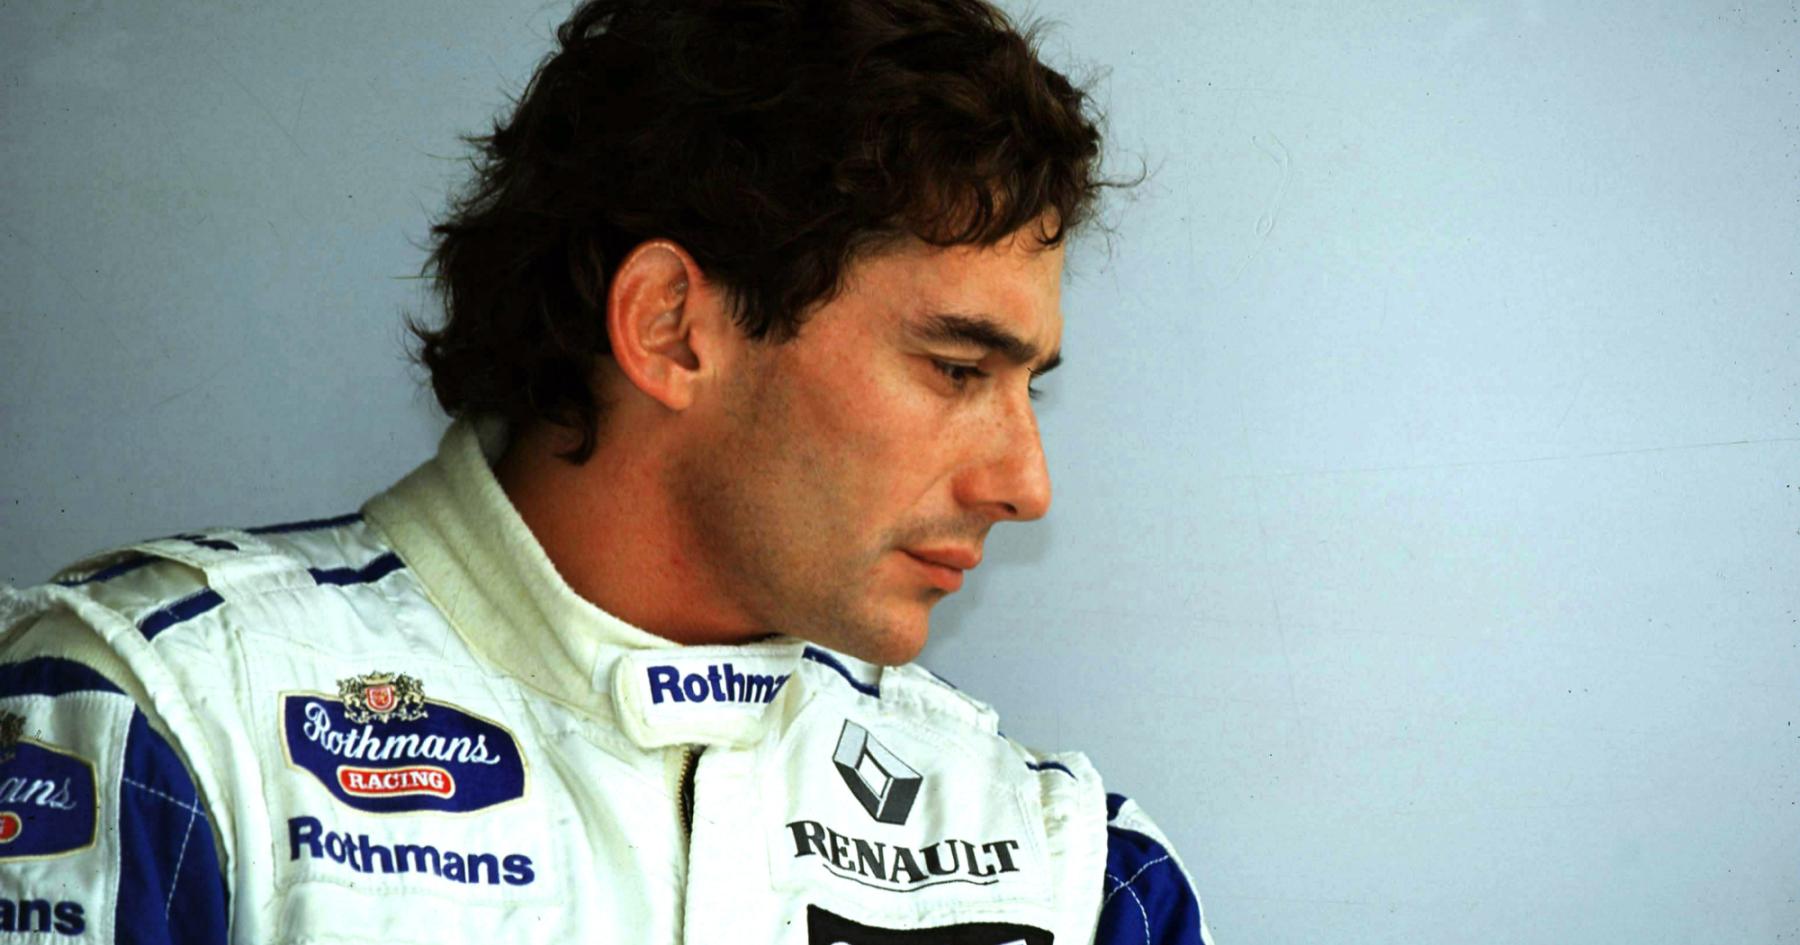 The Senna cult is tarnishing his true F1 legacy